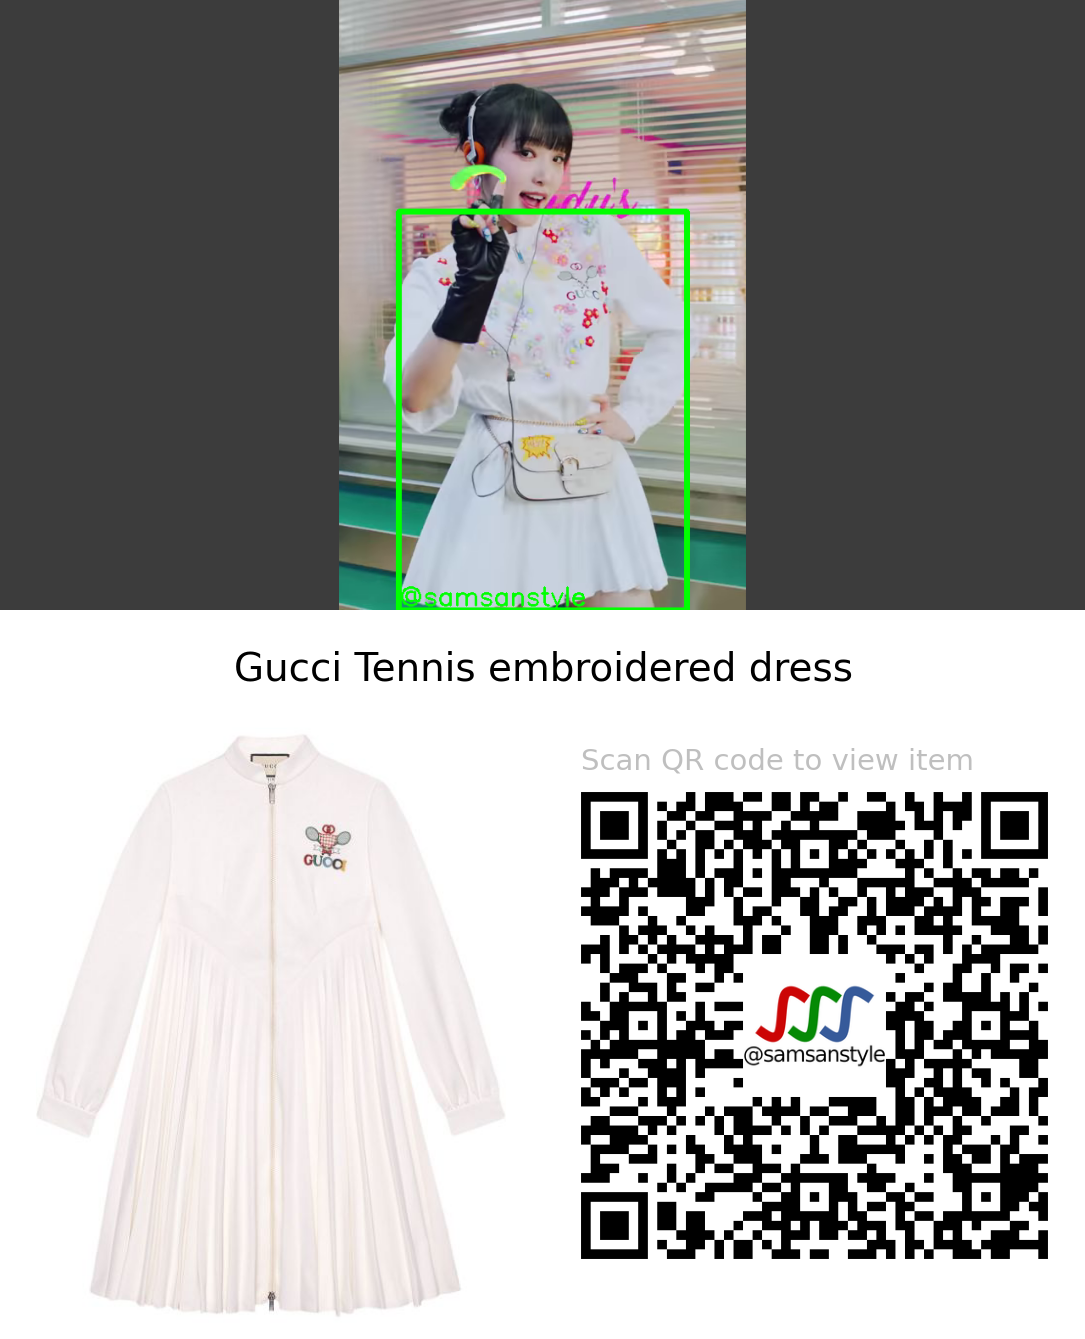 Yena | SMILEY (Feat. BIBI) MV | Gucci Tennis embroidered dress